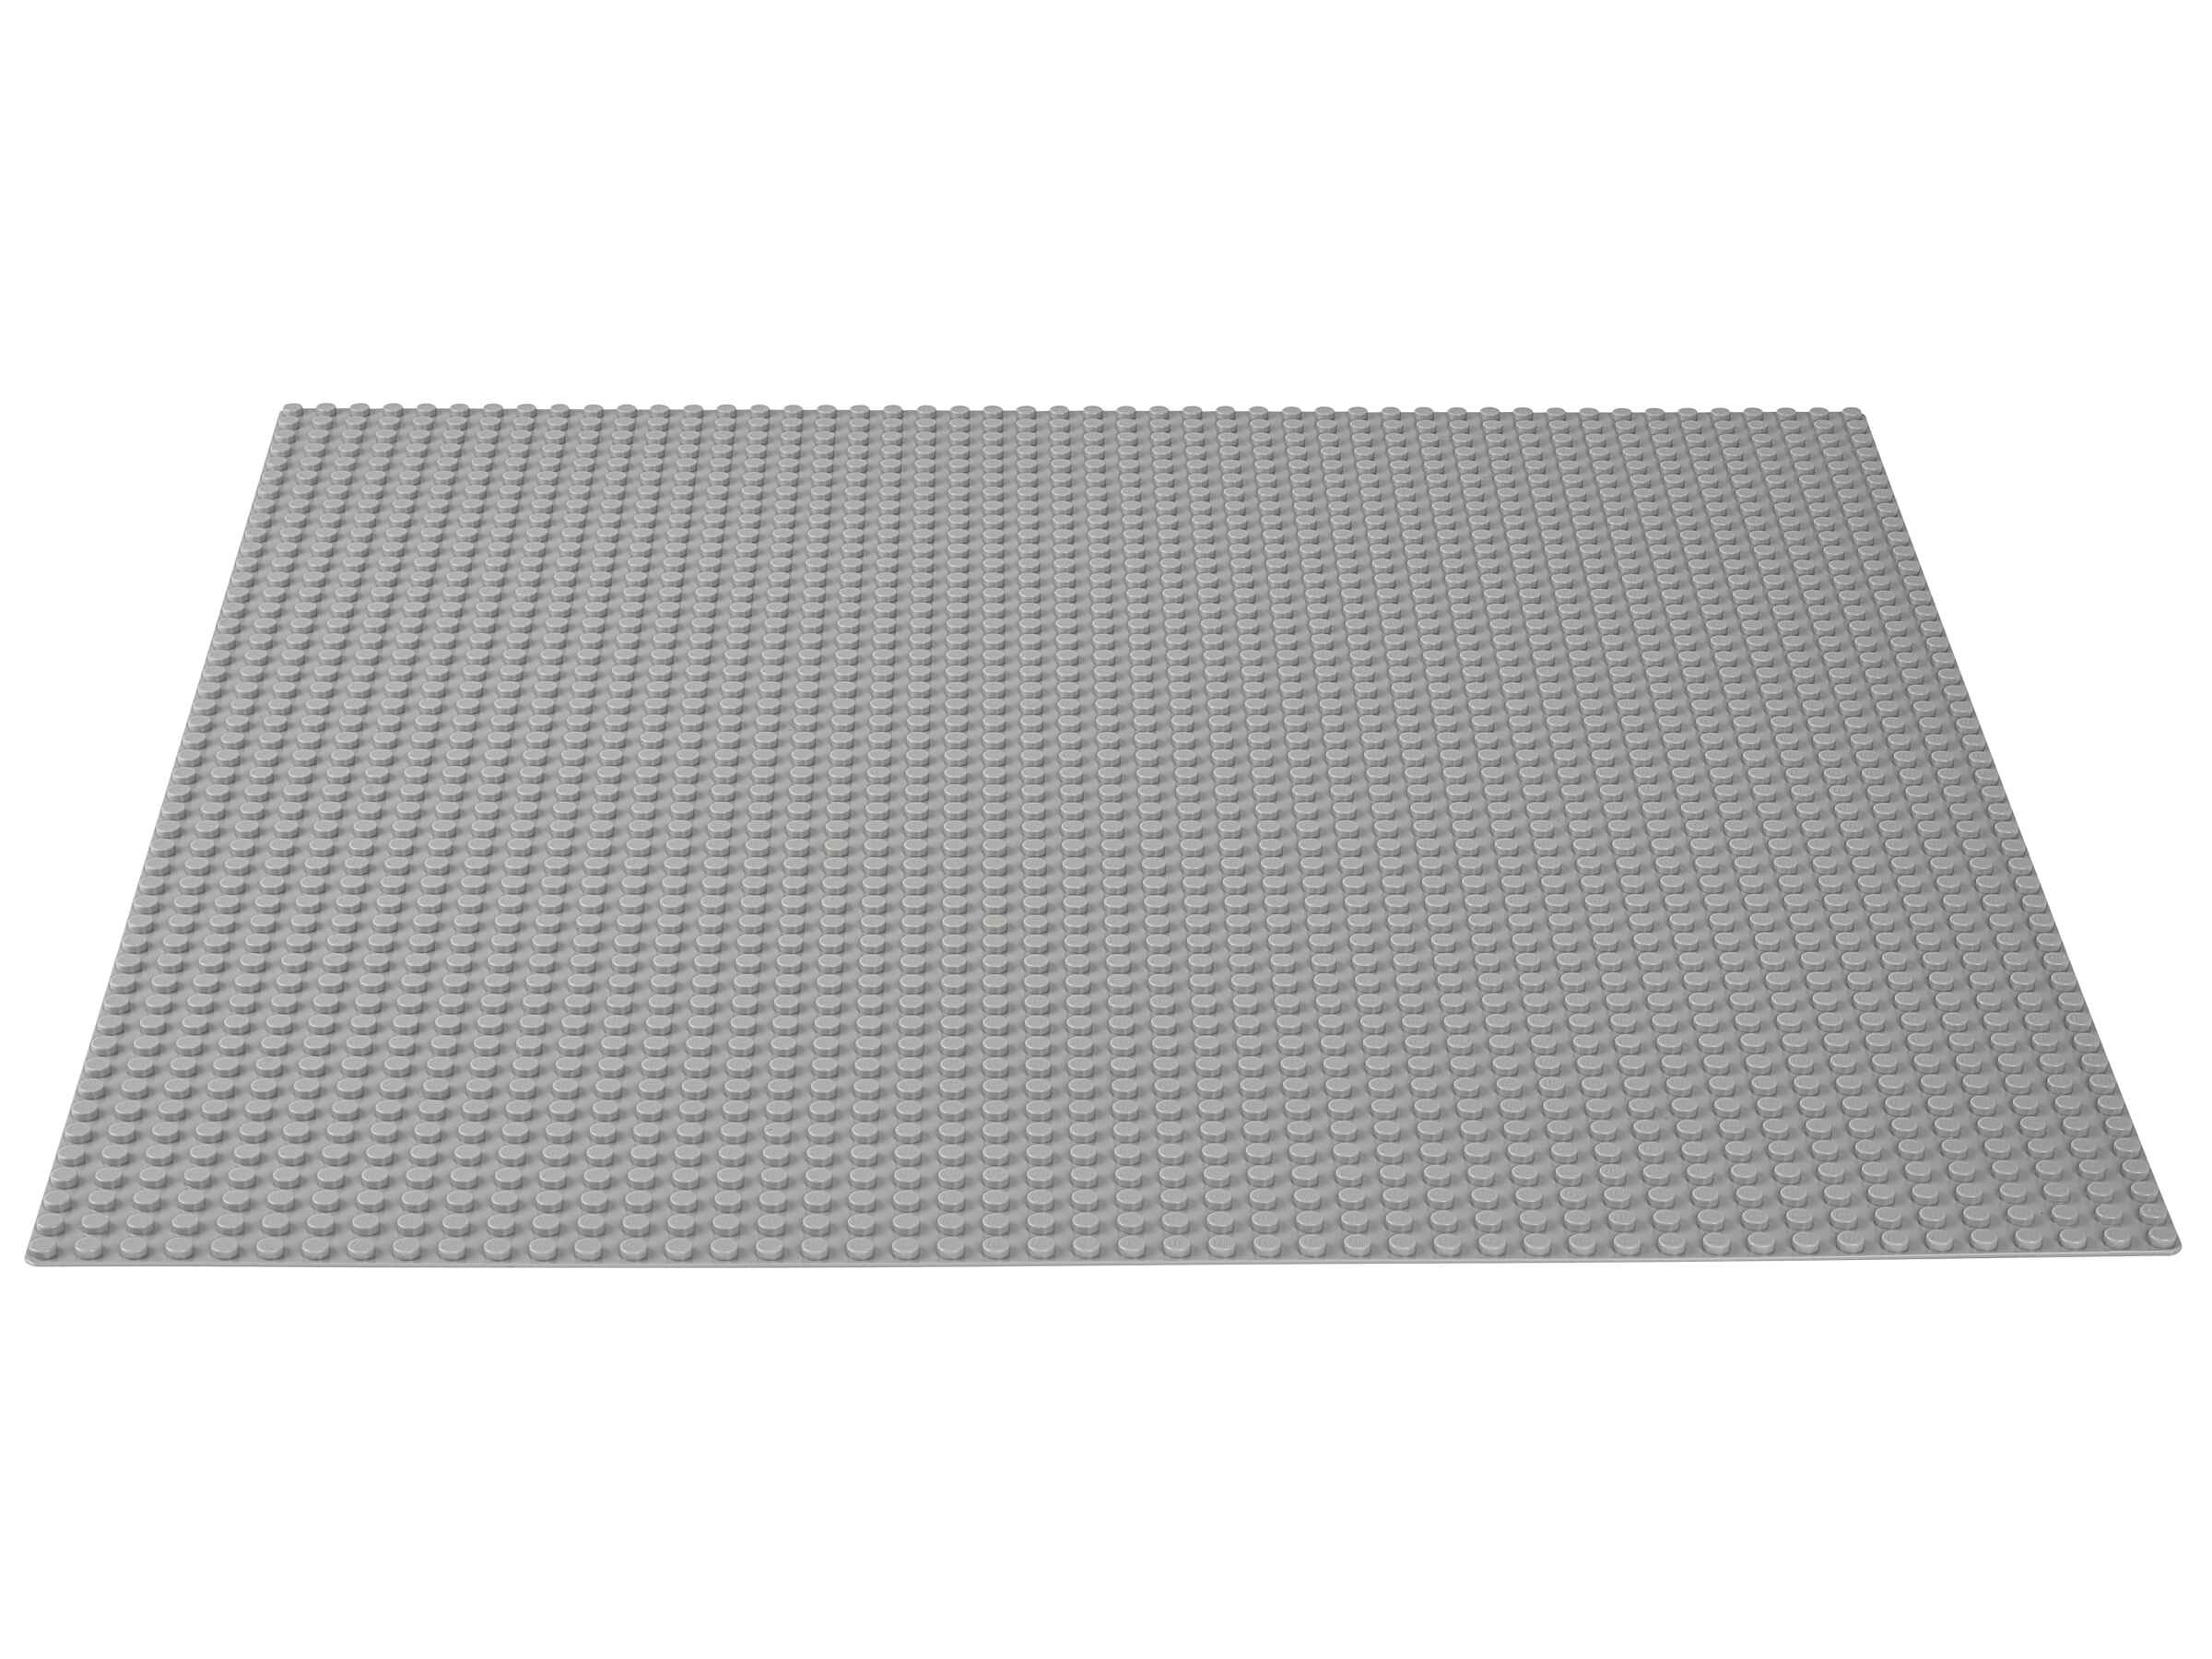 LEGO 10701 Classic Graue Bauplatte 38 x 38 cm Grundplatte